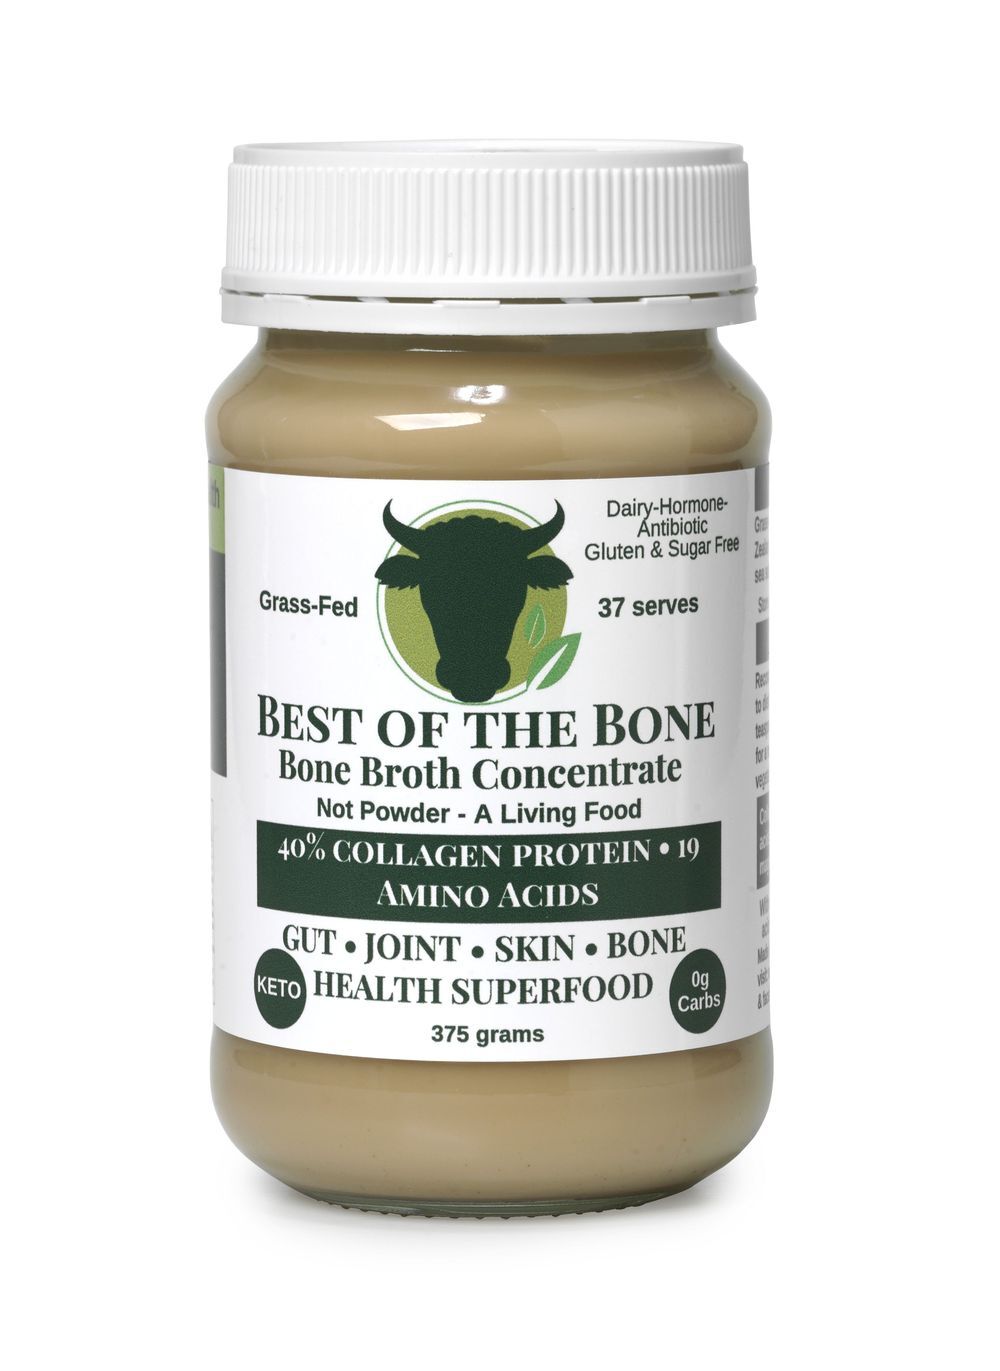 Best of the Bone Real Bone Broth Concentrate - Original 390g